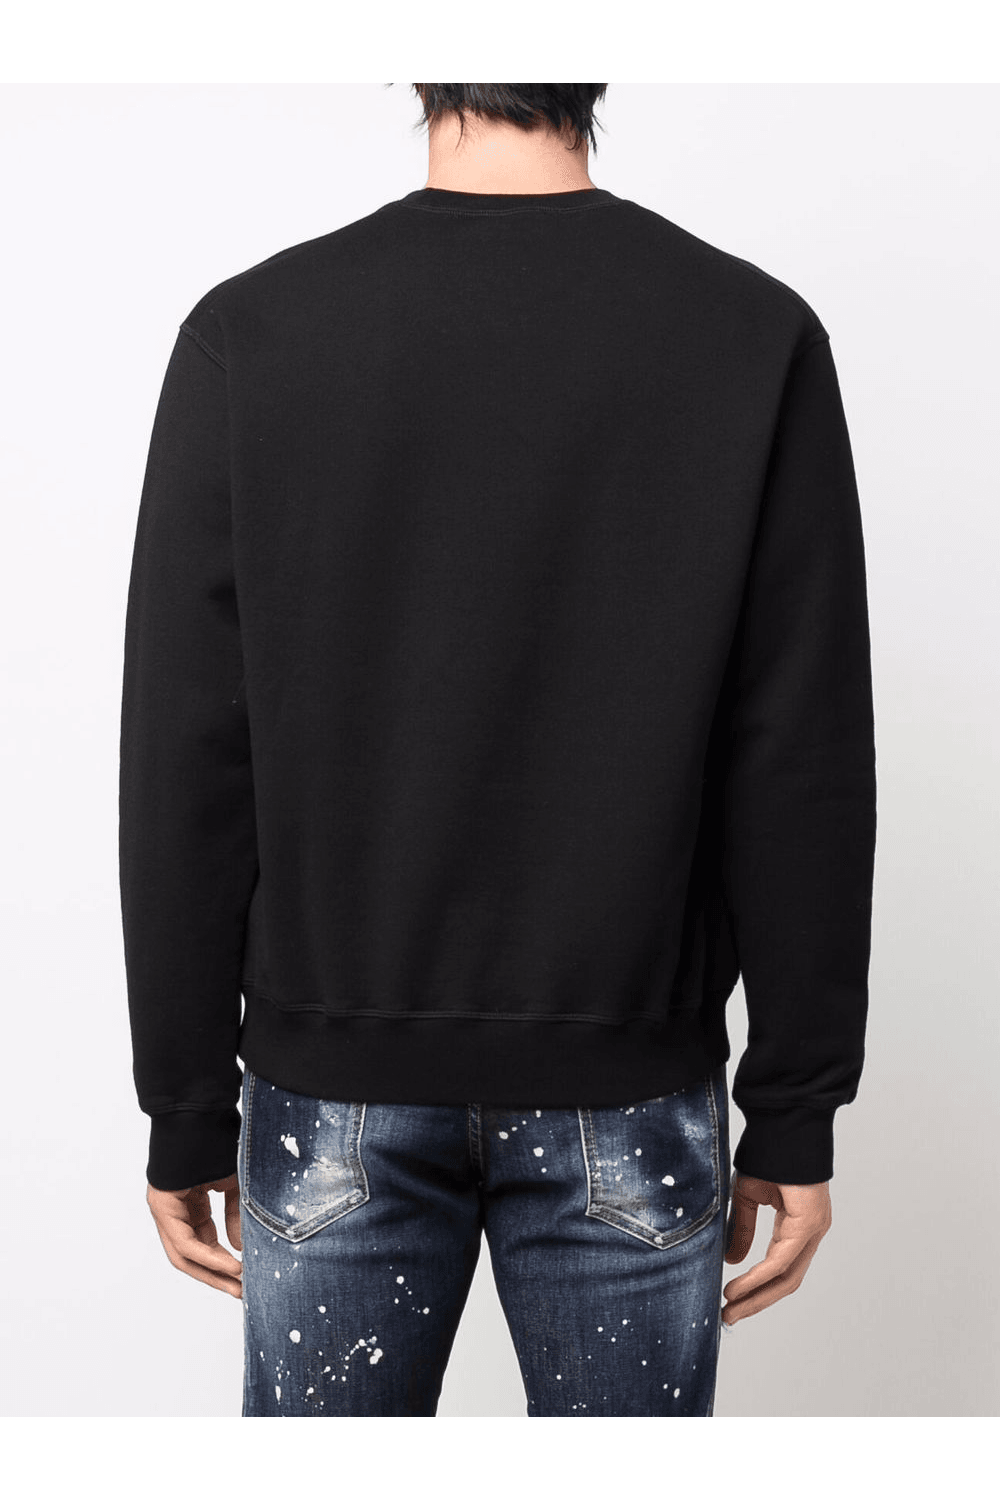 Elegant Black Cotton Sweater with Contrast Design